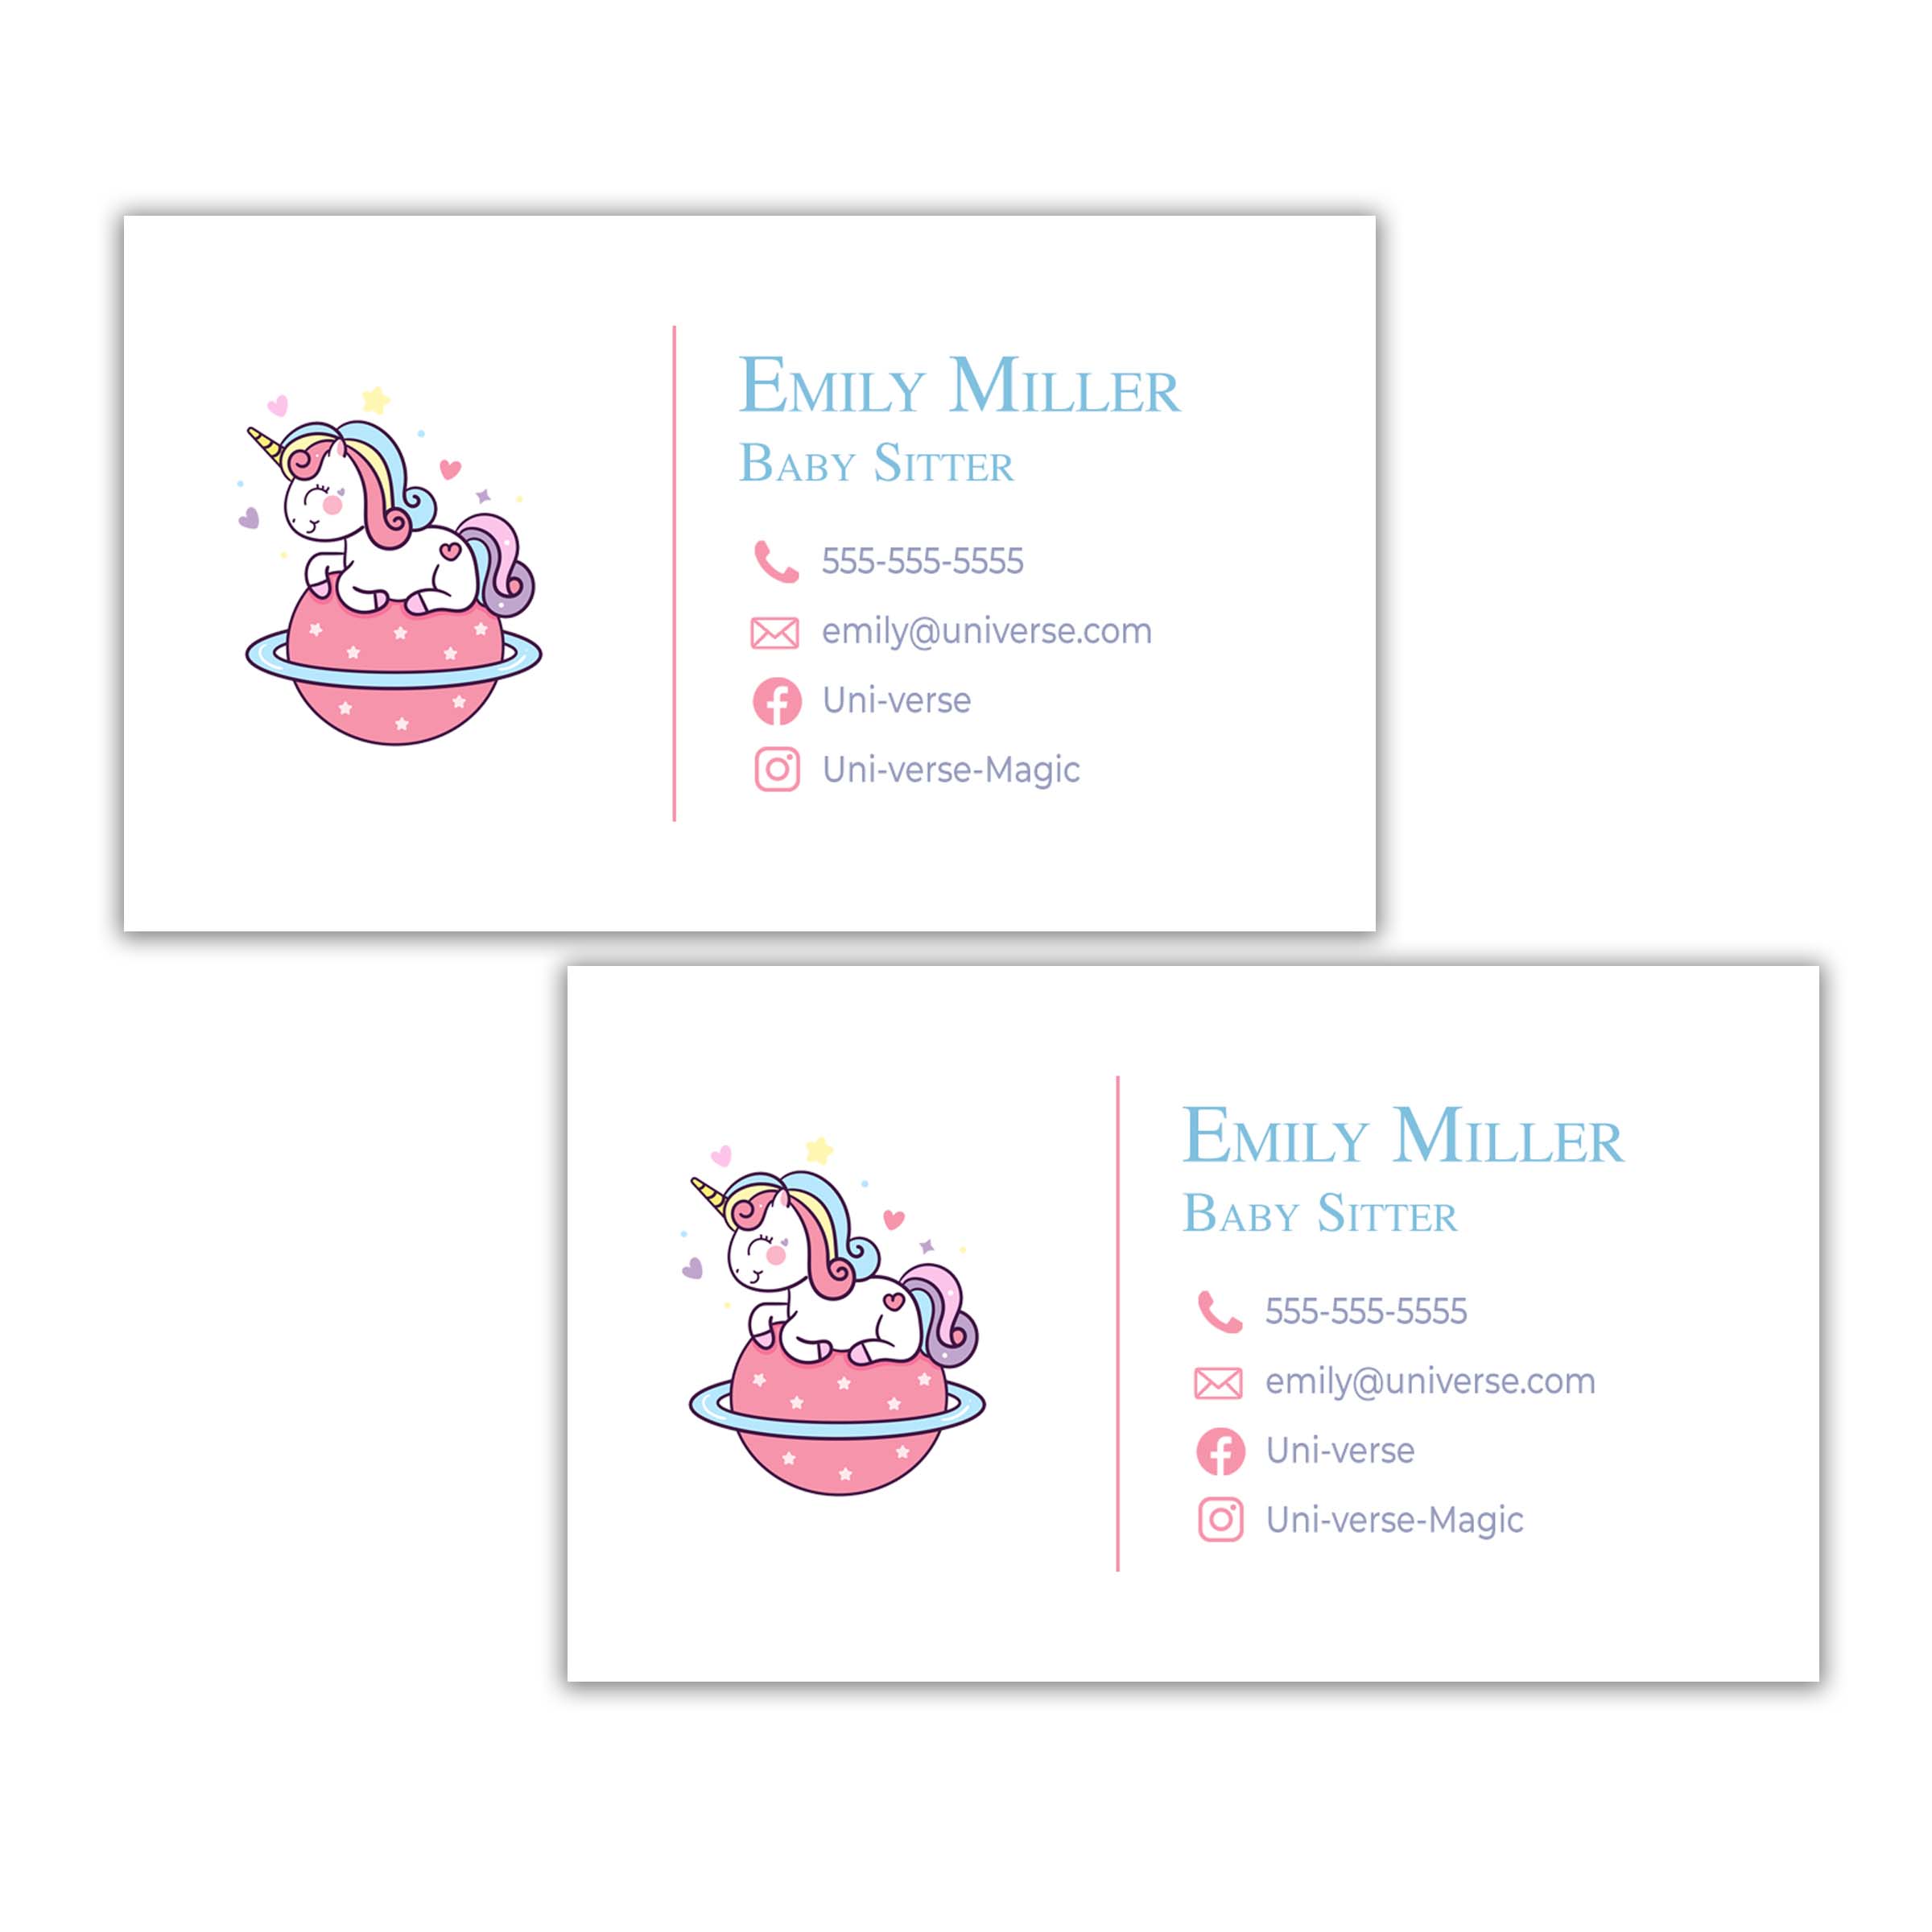 Unicorn business card